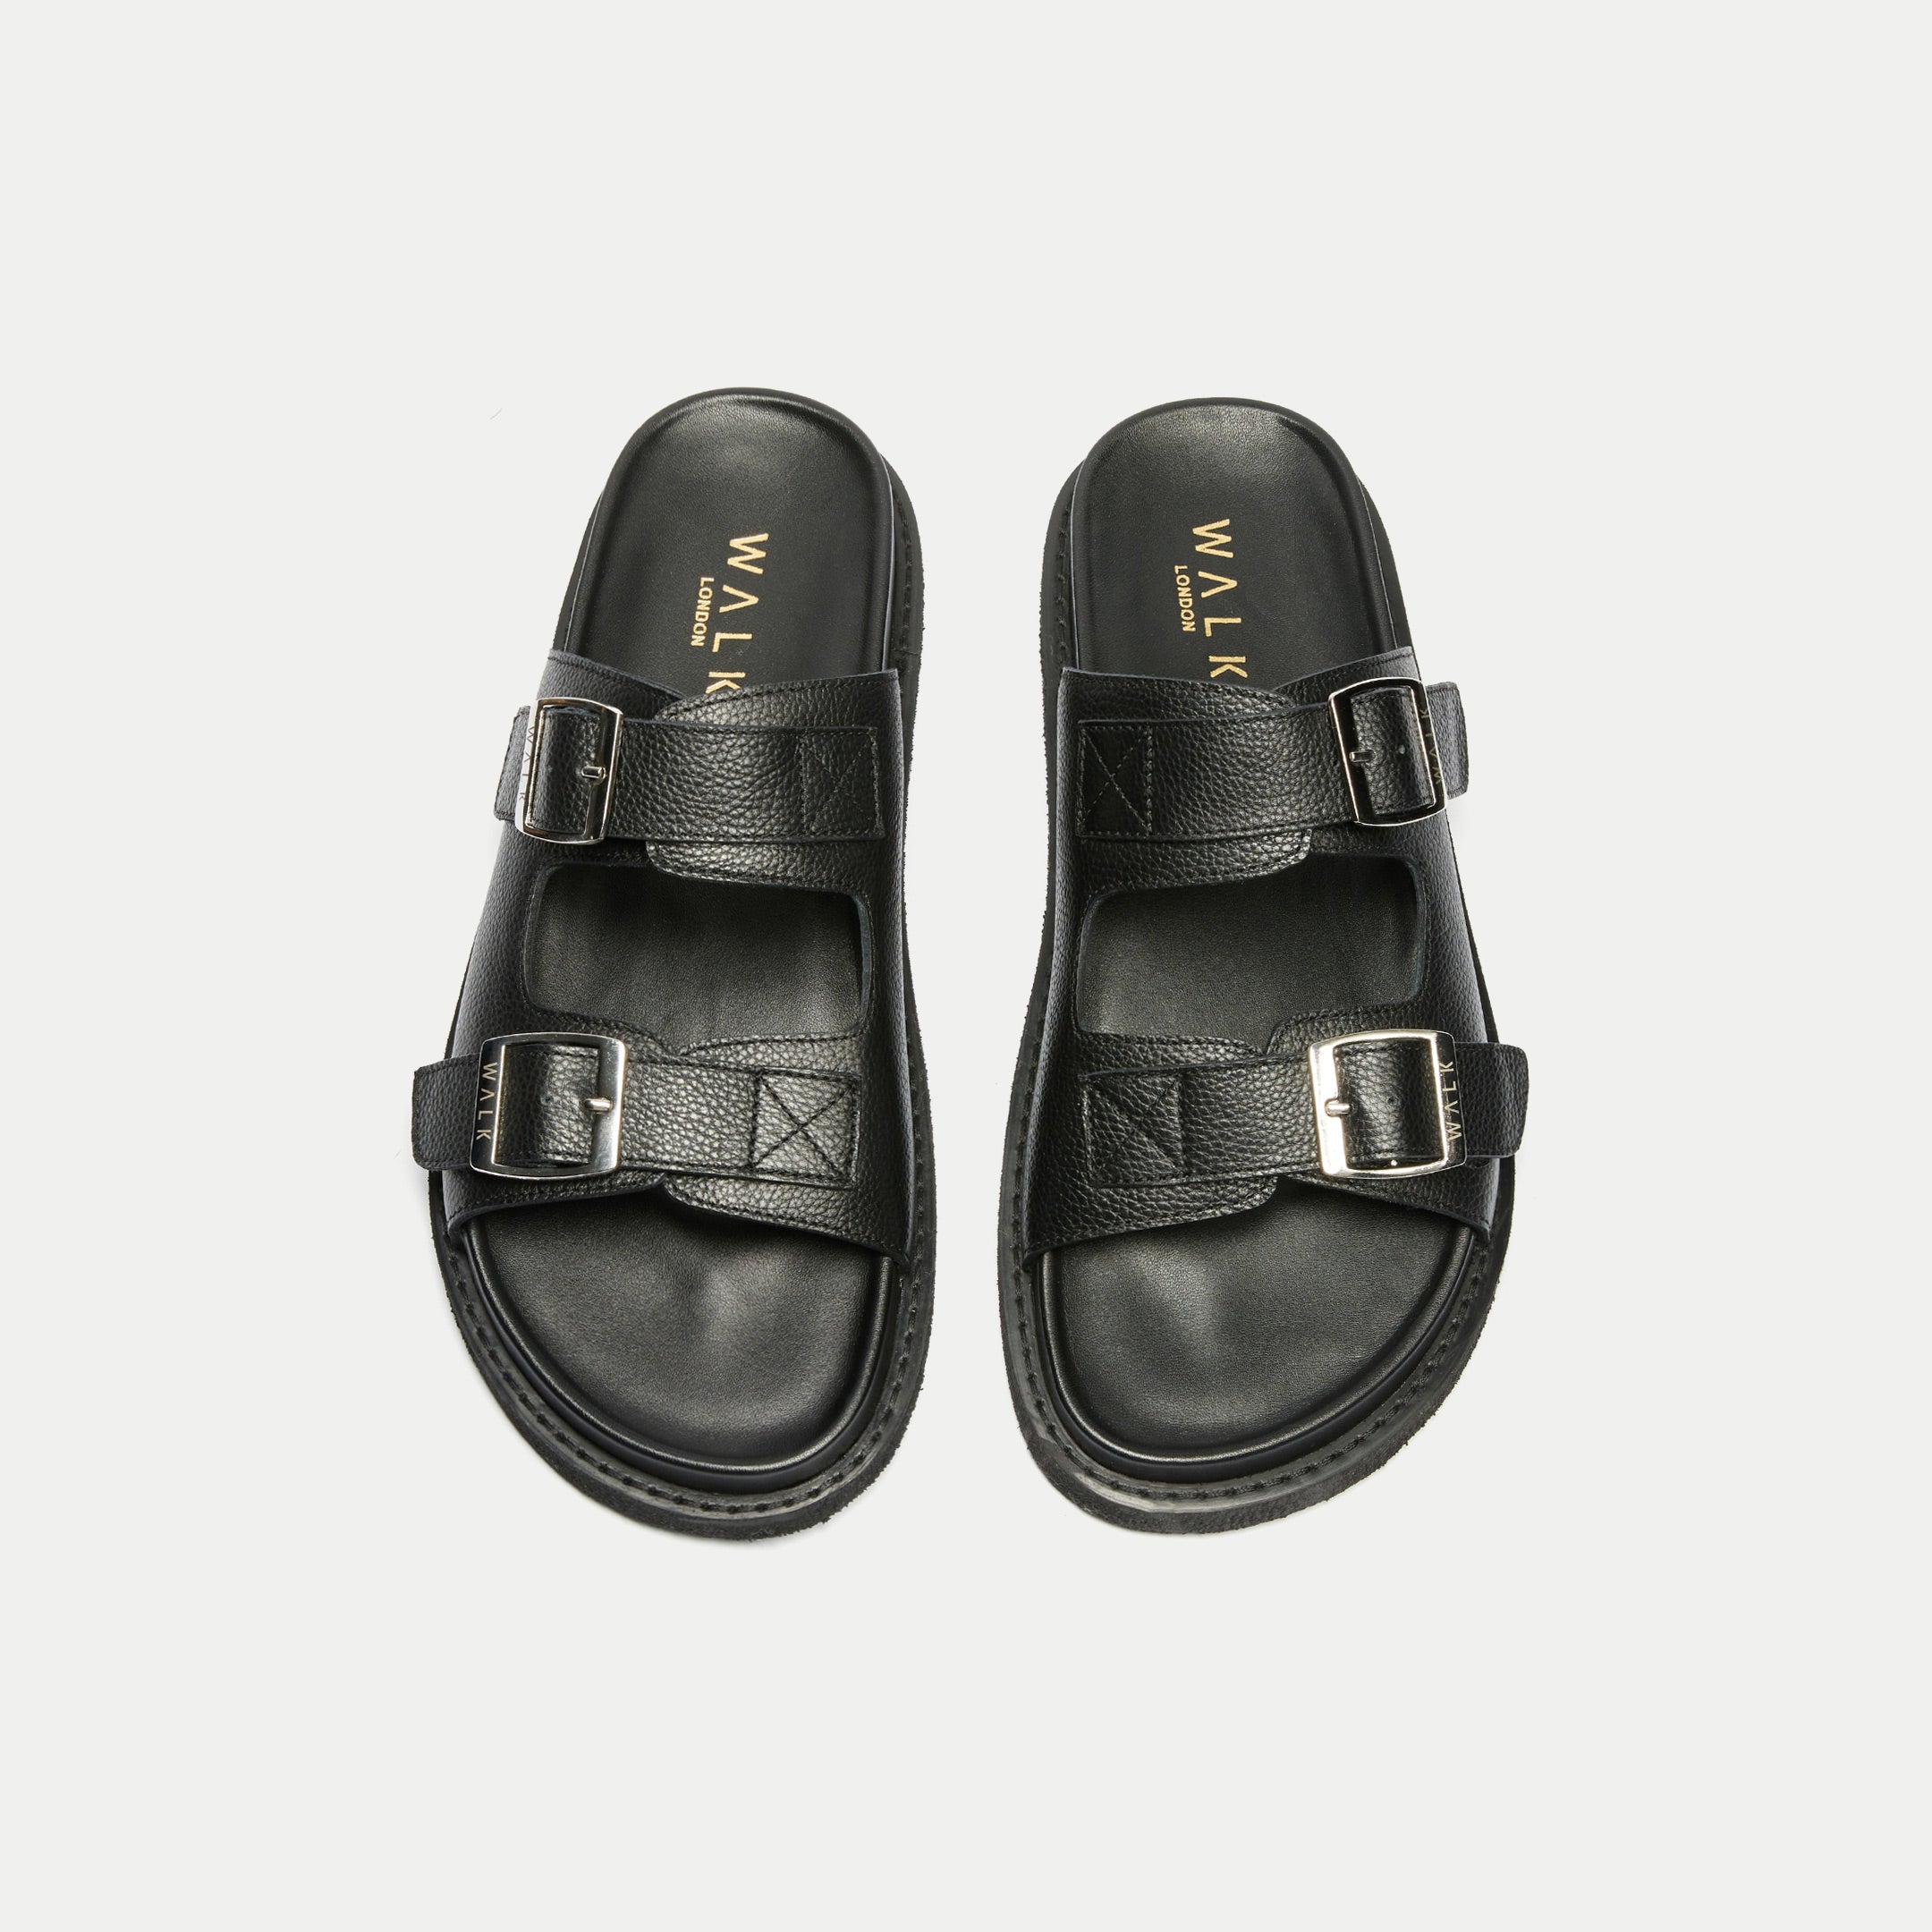 Walk London Shore Double Strap Sandal in Black Leather